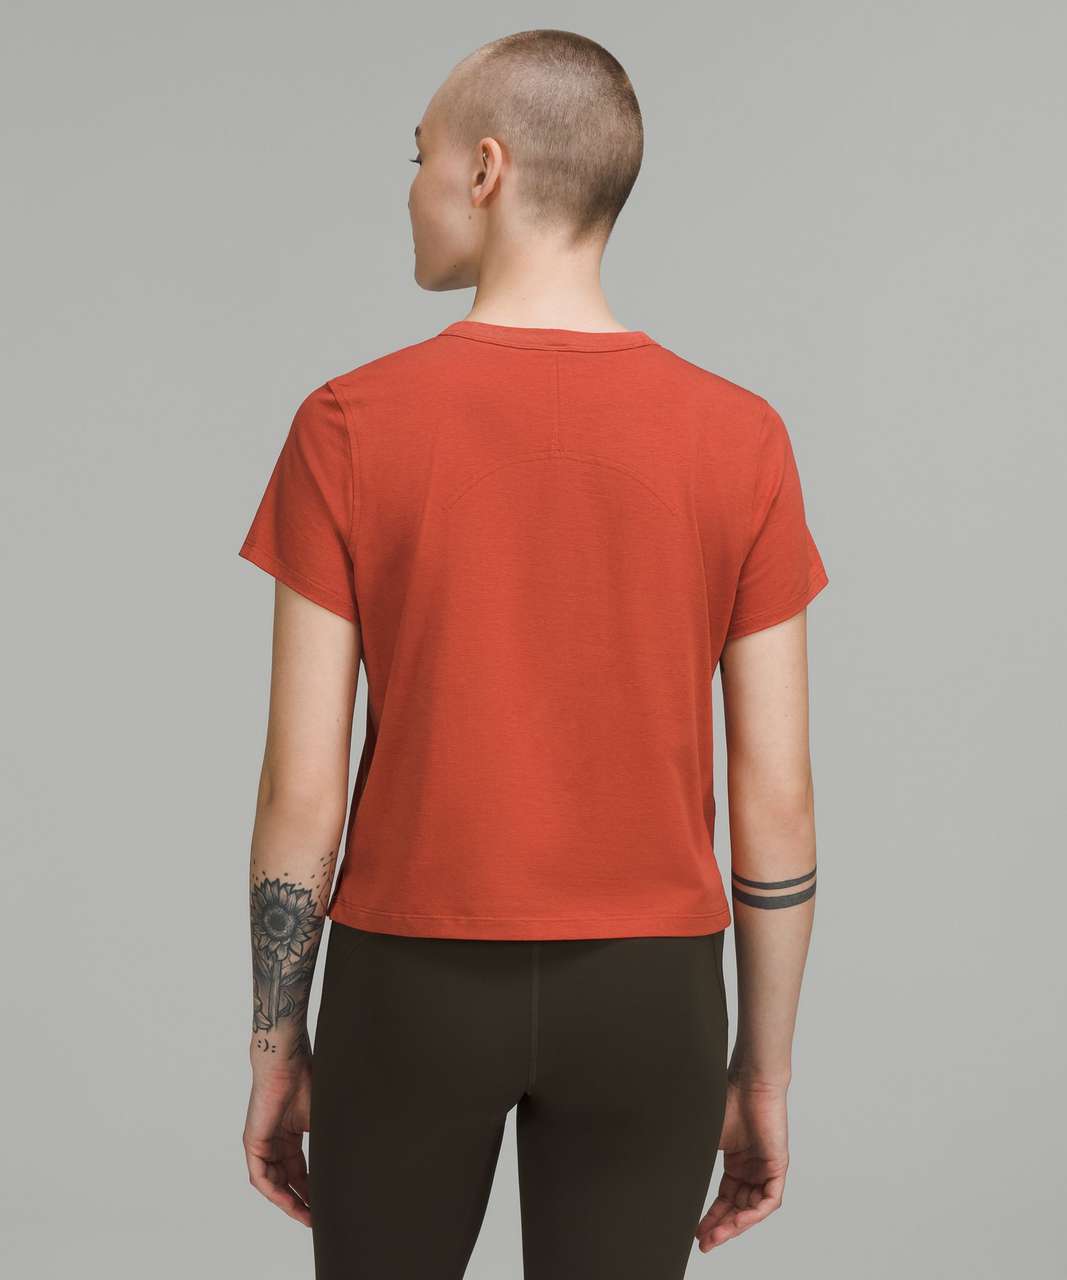 Lululemon Classic-Fit Cotton-Blend T-Shirt - Red Rock